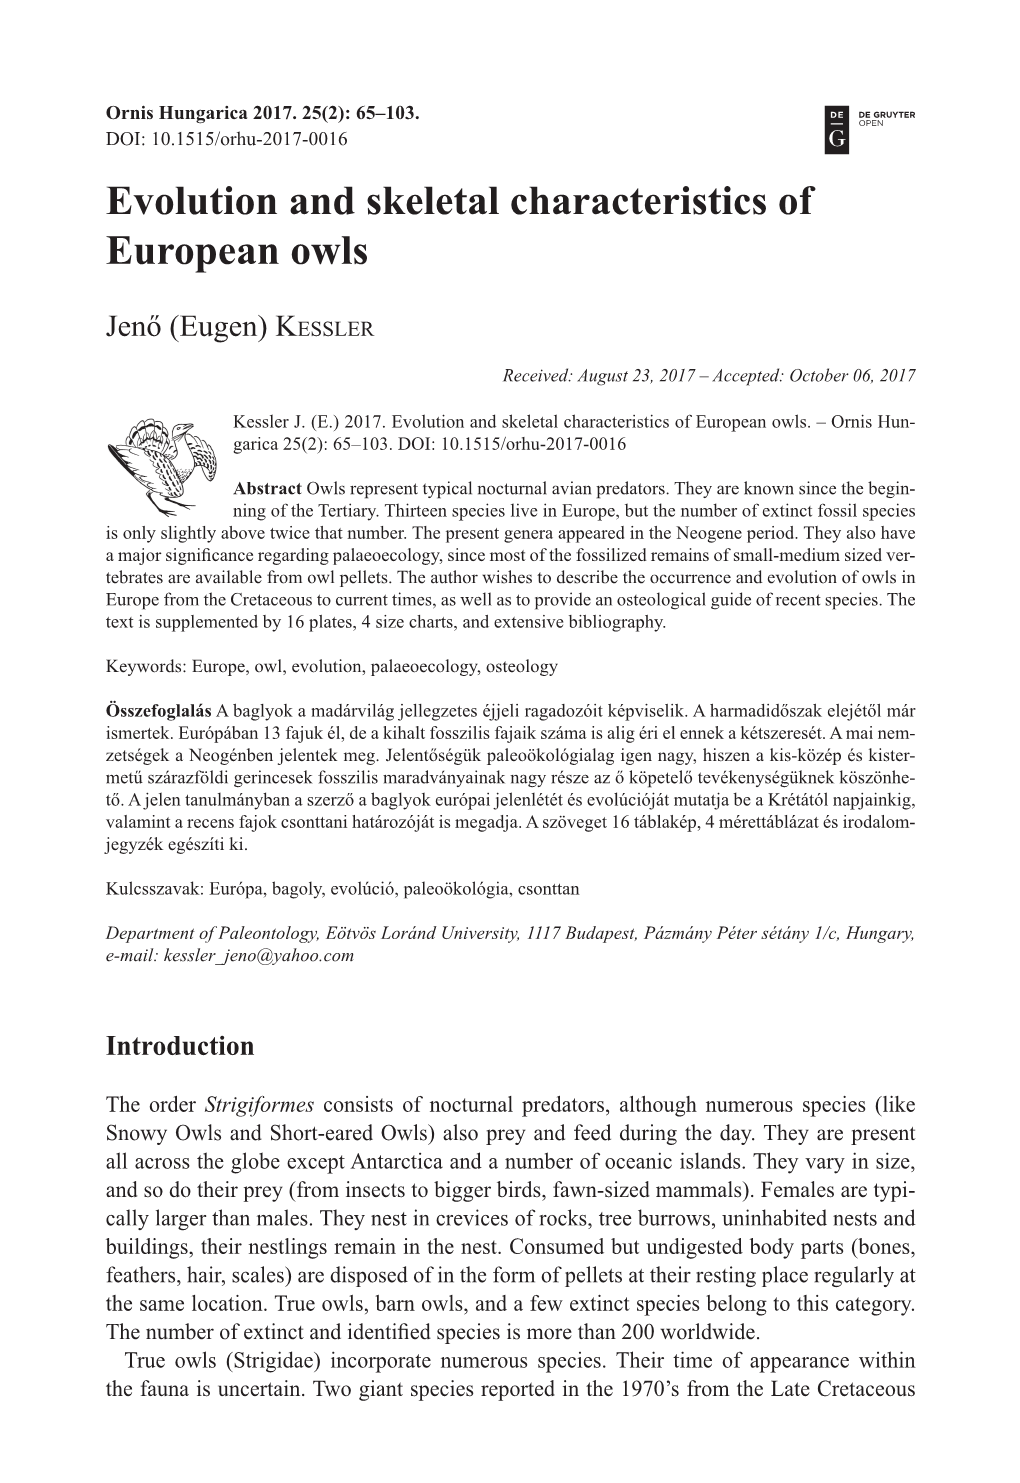 Evolution and Skeletal Characteristics of European Owls